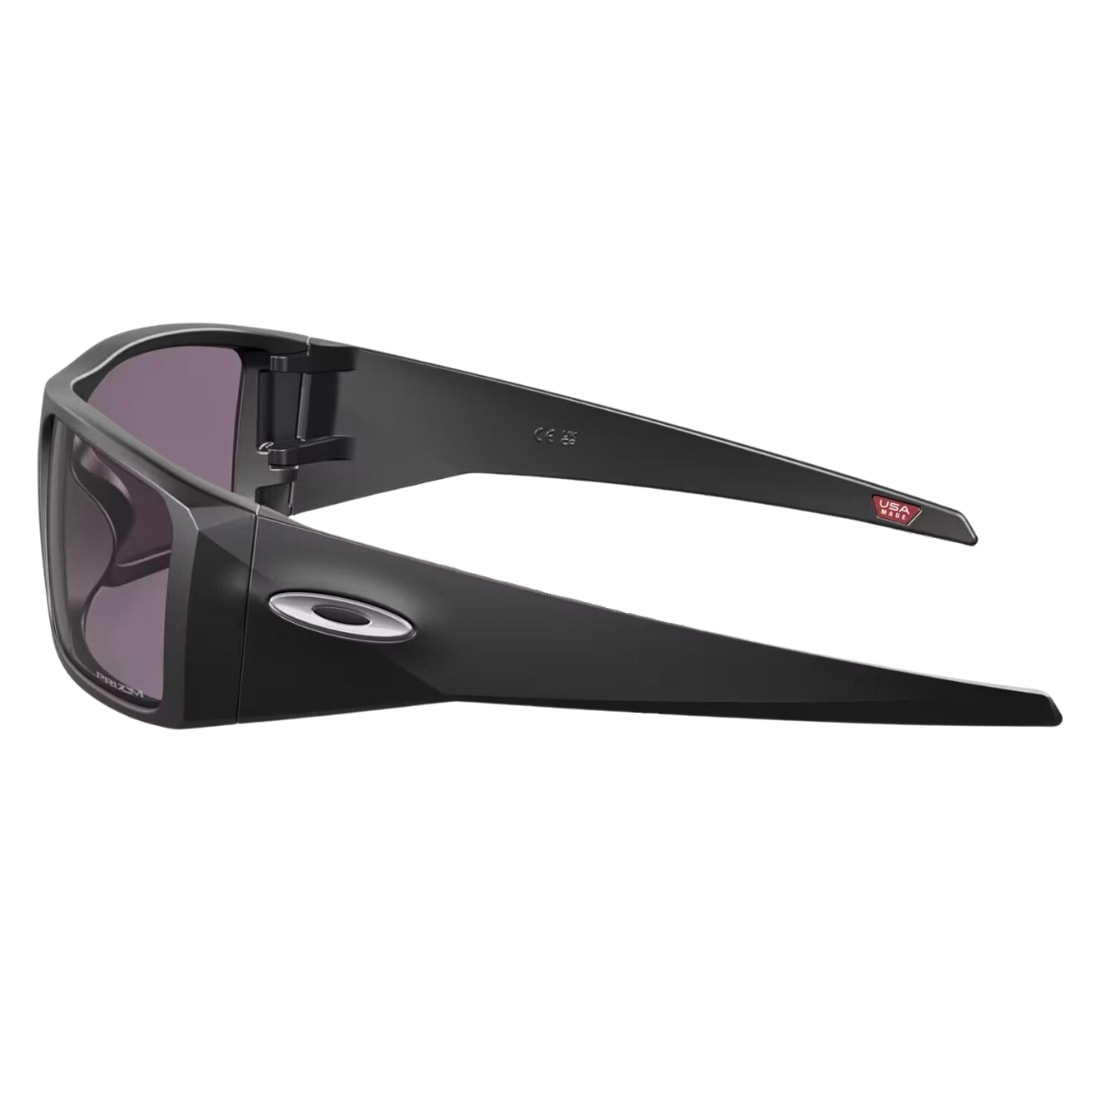 Oakley Heliostat Sunglasses - Matte Black/Prism Grey - Wrap Around Sunglasses by Oakley